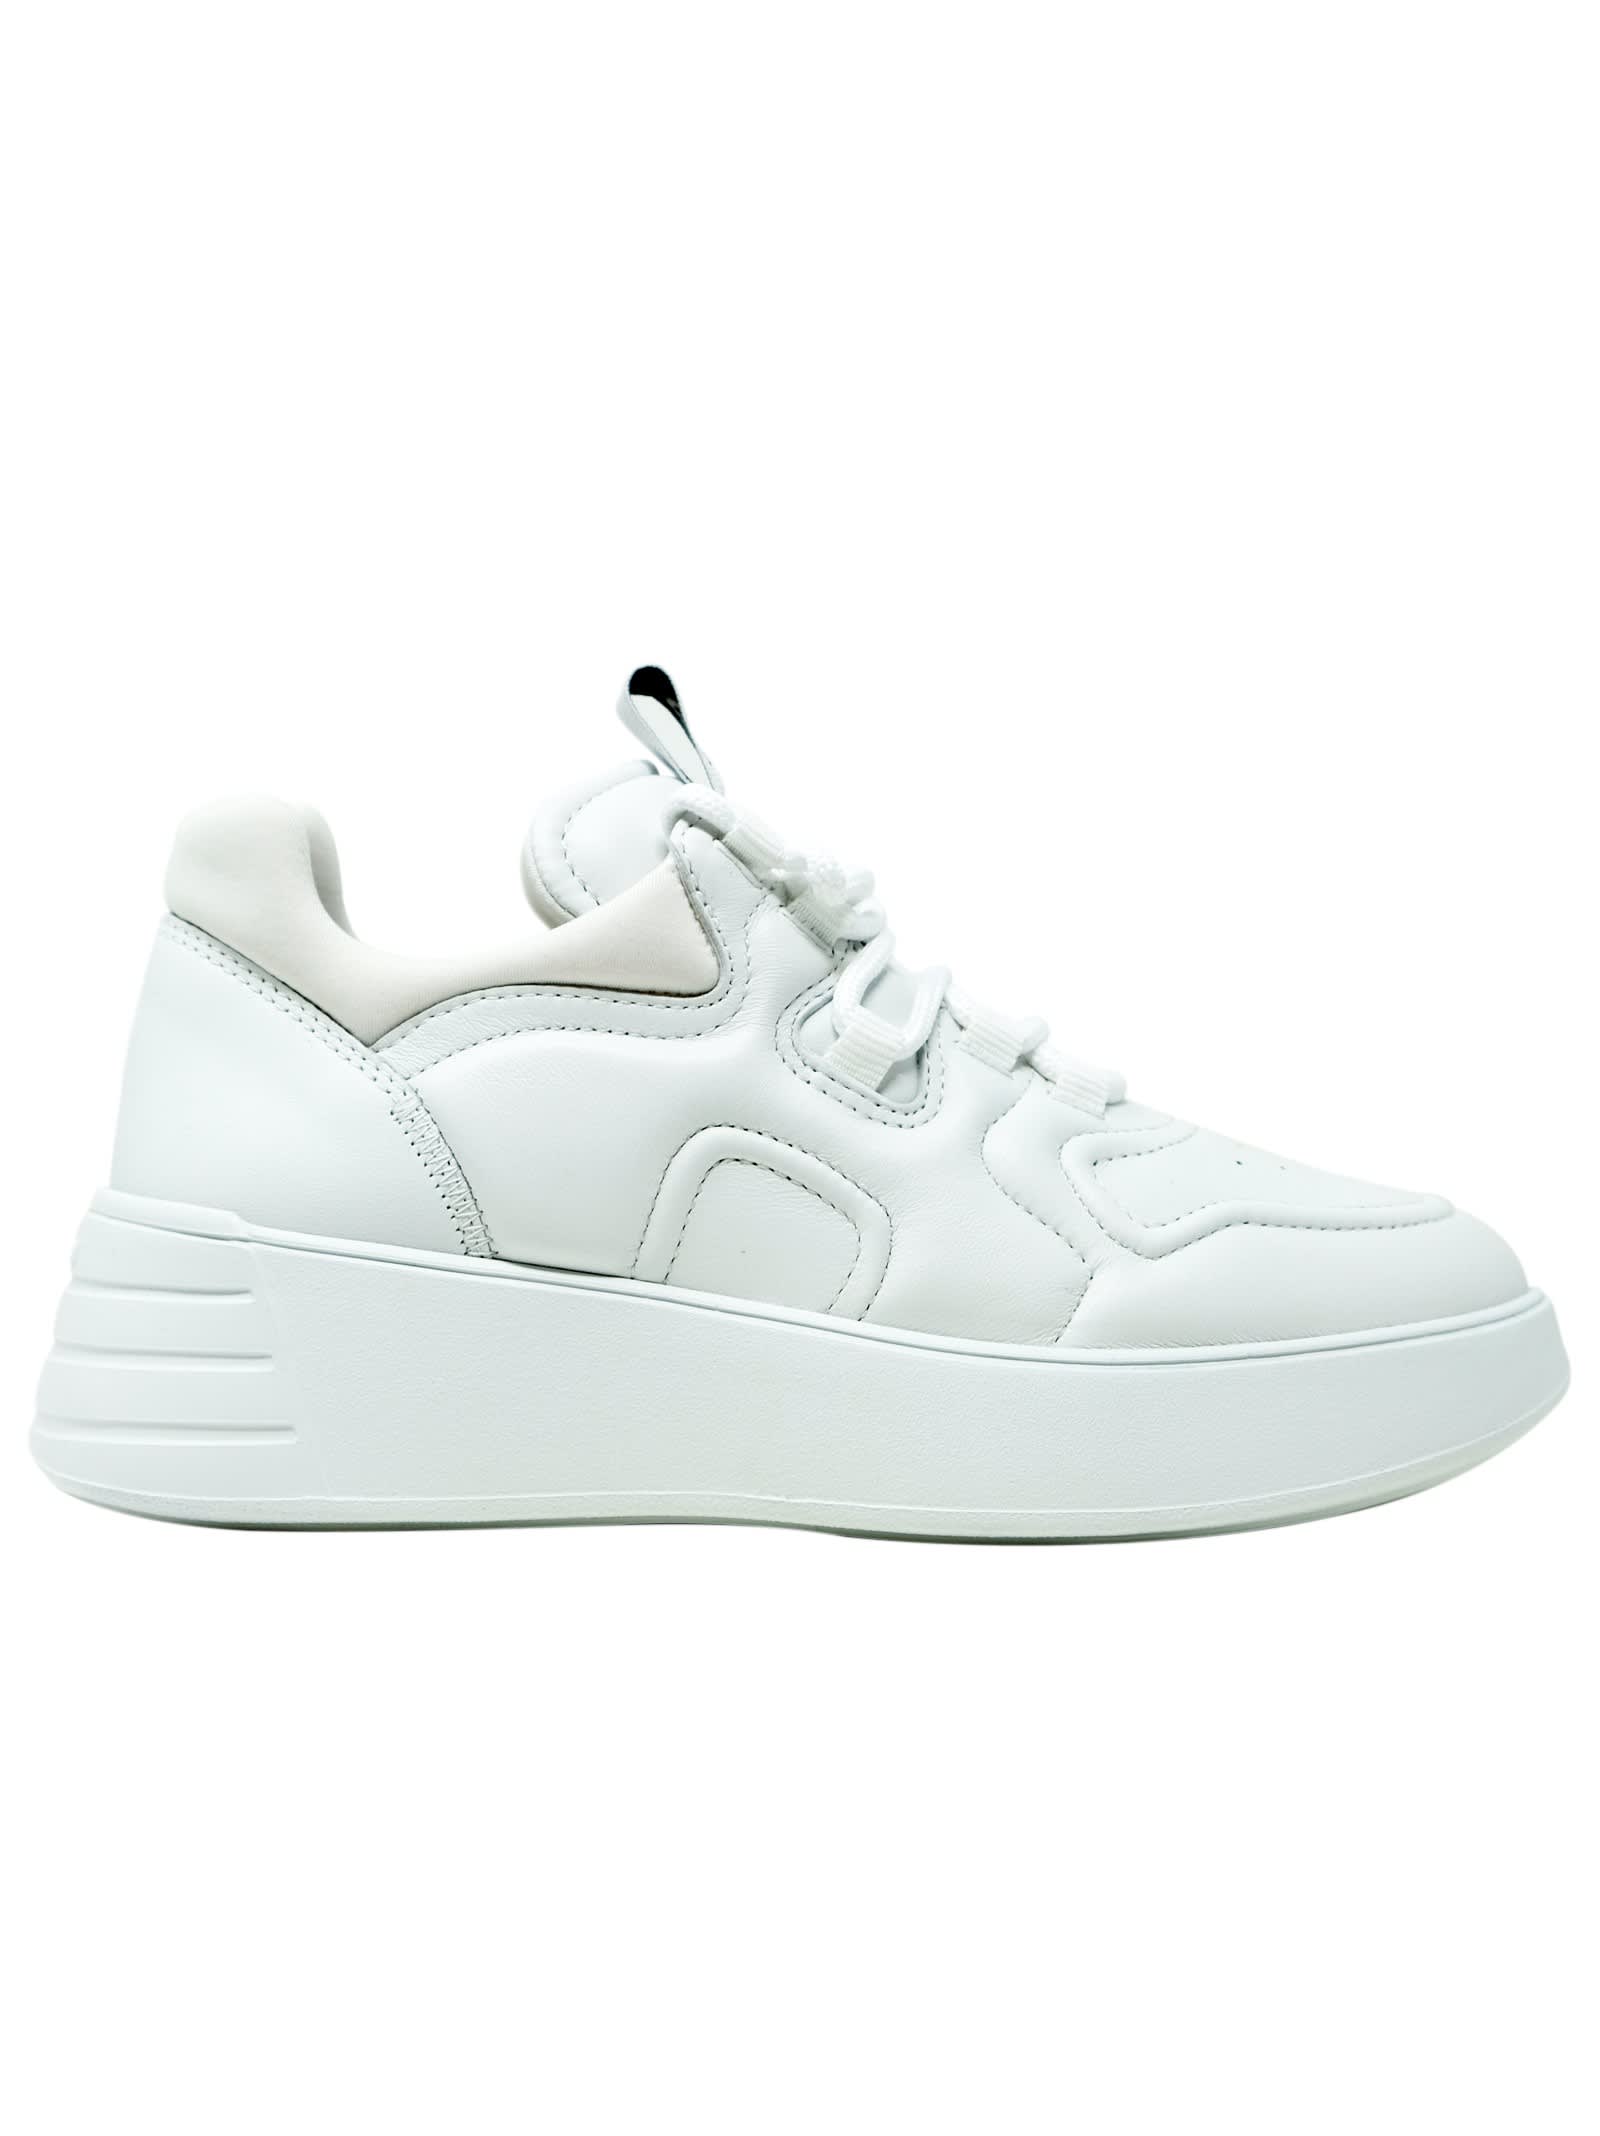 Hogan White Leather Rebel H562 Sneakers